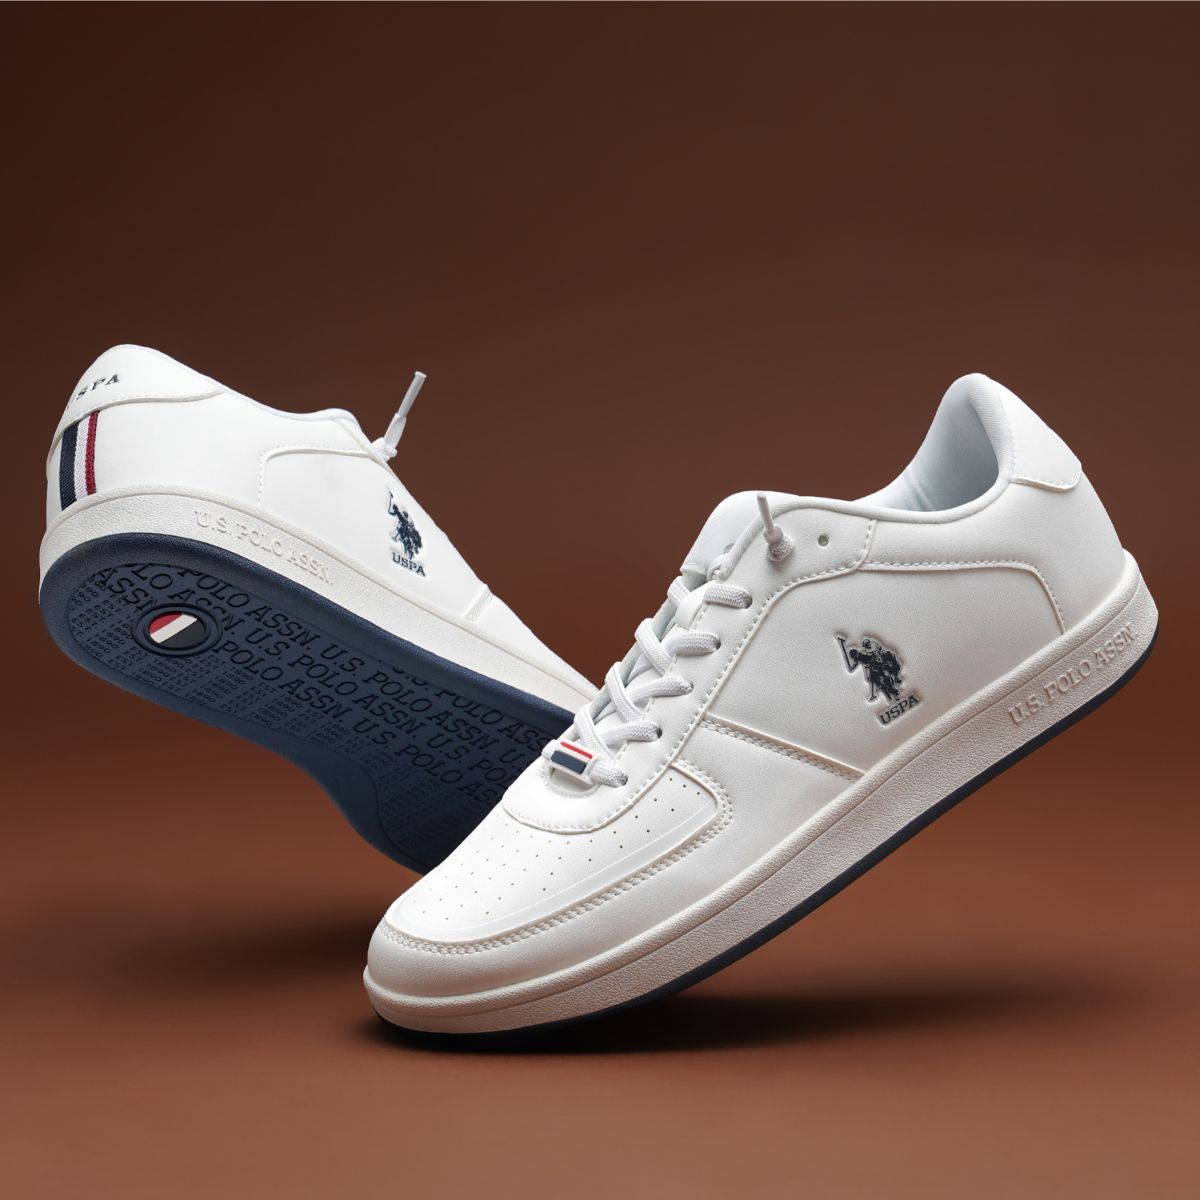 US Polo Assn Shoes | Shoe Carnival